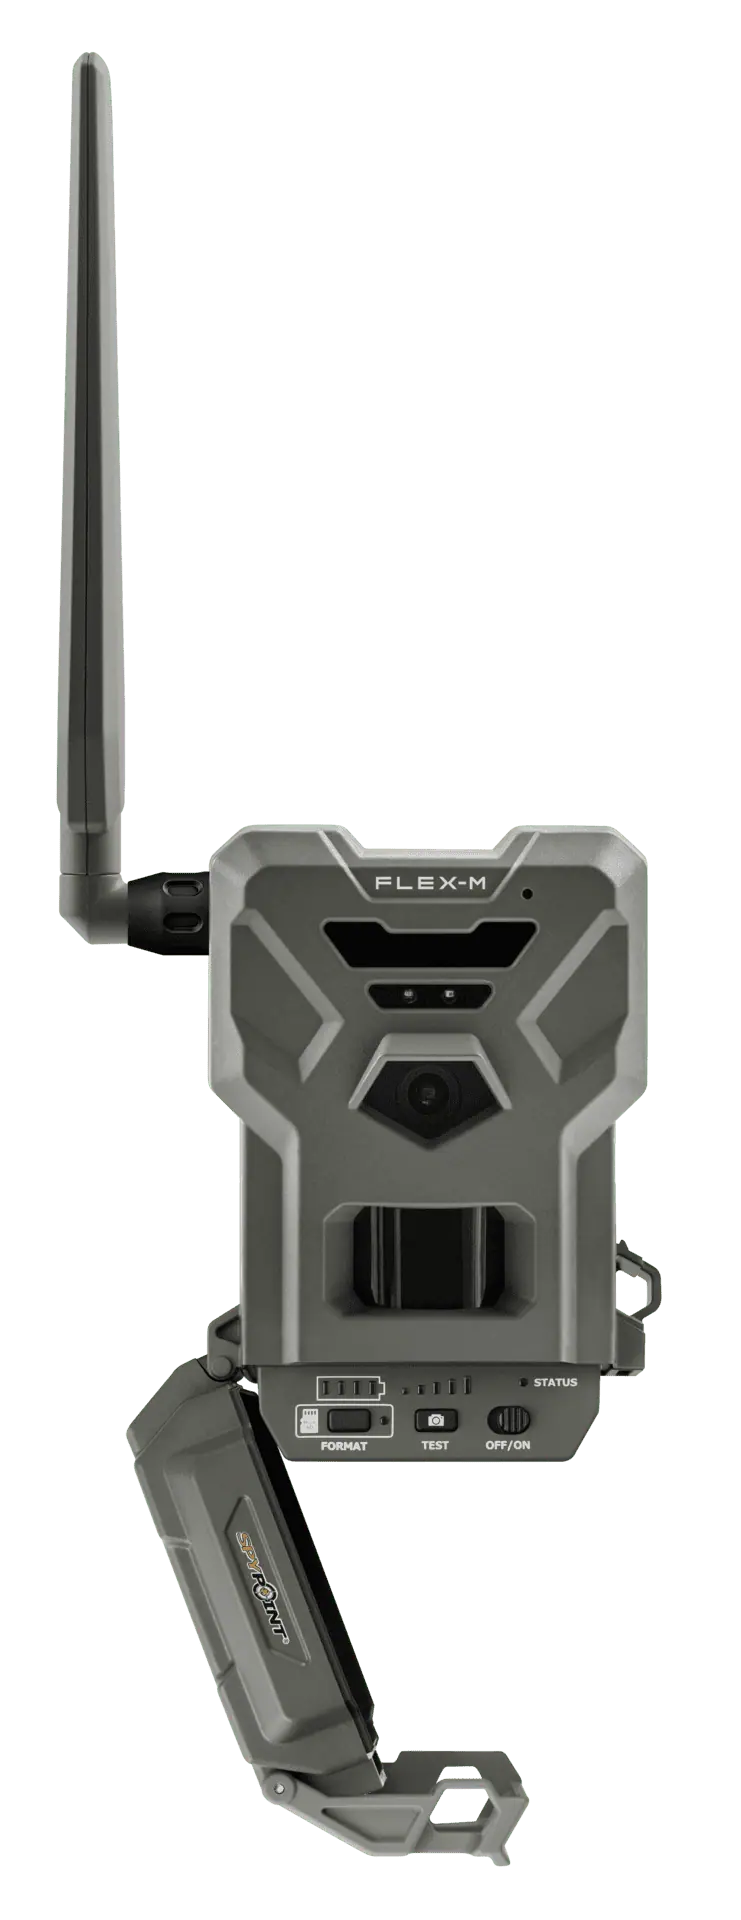 Spypoint Trail Camera FLEX-M
